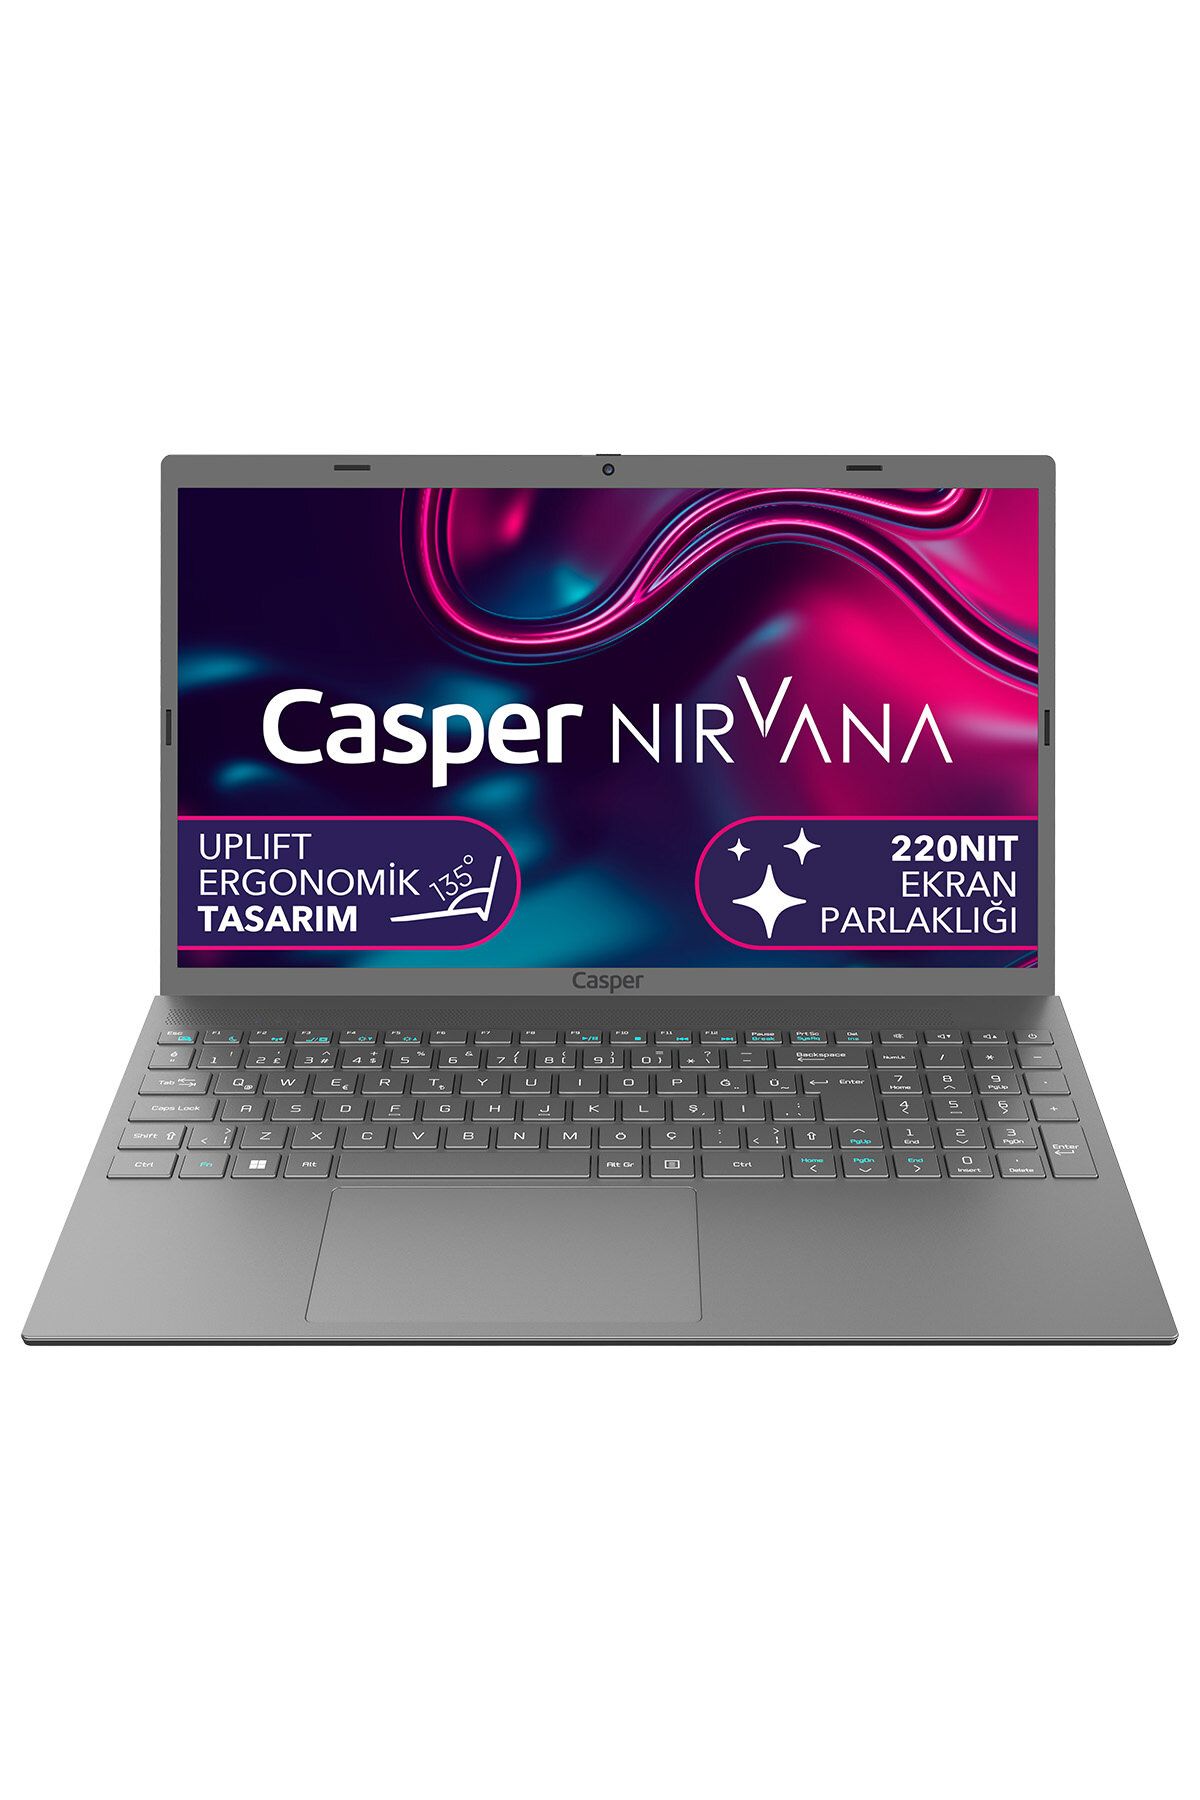 Casper Nirvana C370.4020-4C00X Intel Celeron N4020 4GB RAM 120GB SSD Freedos 15.6" HD